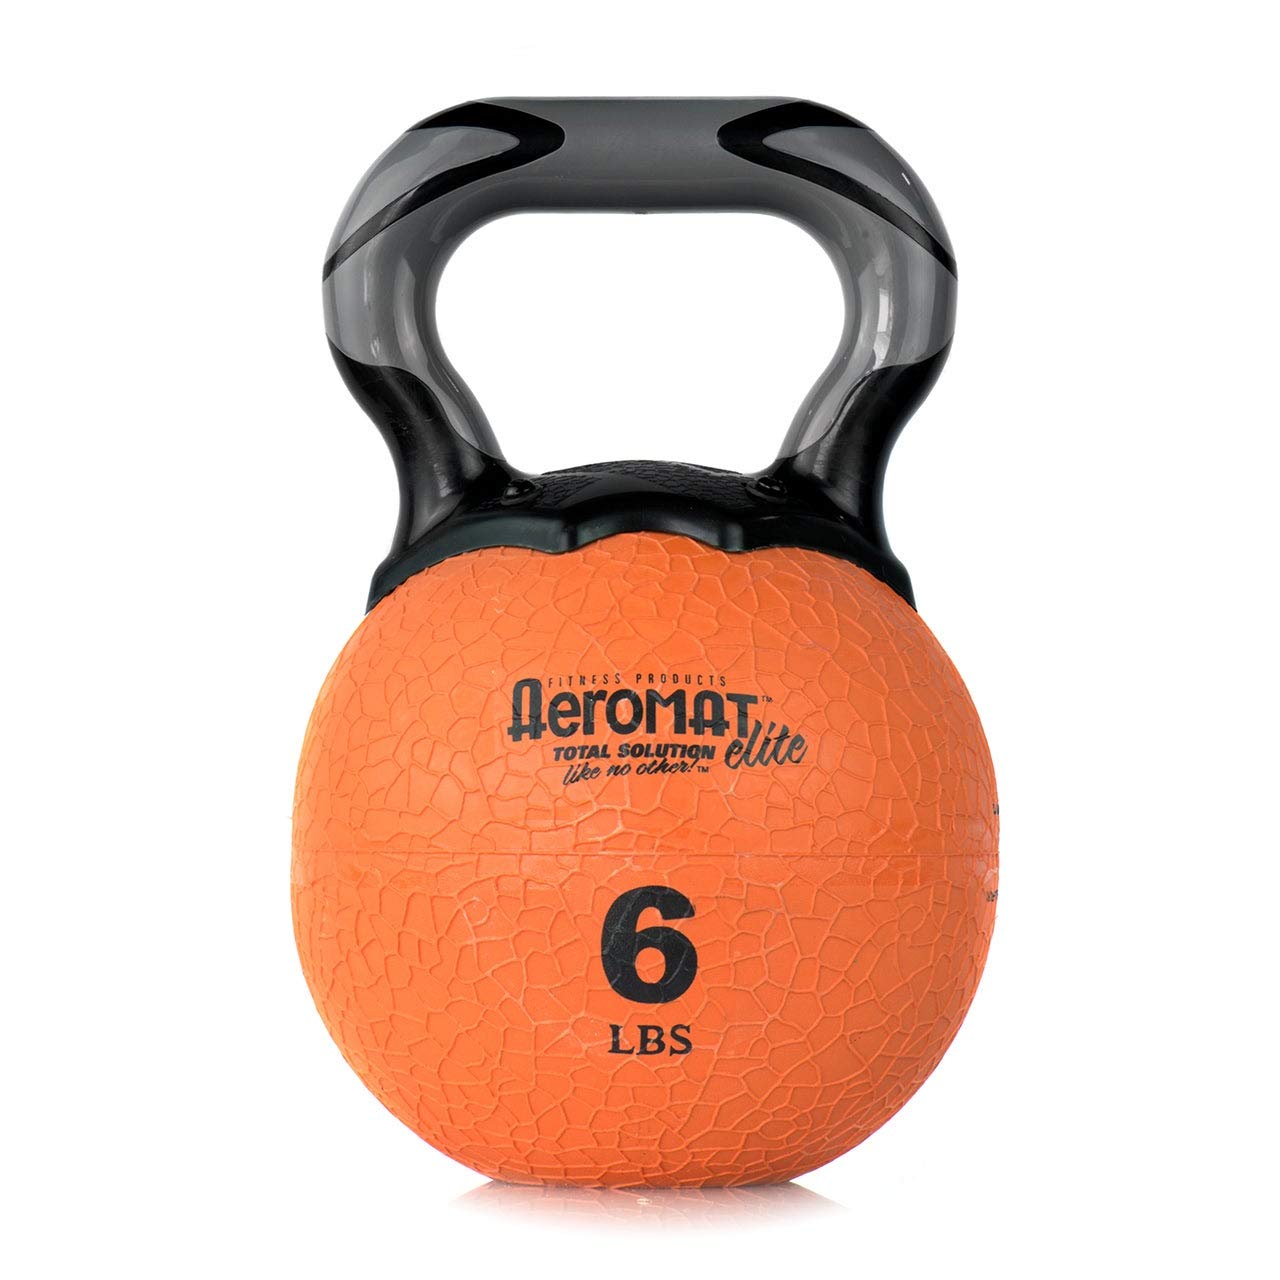 Aeromat Elite Kettlebell Medicine Ball Weight, 8 LB - Orange